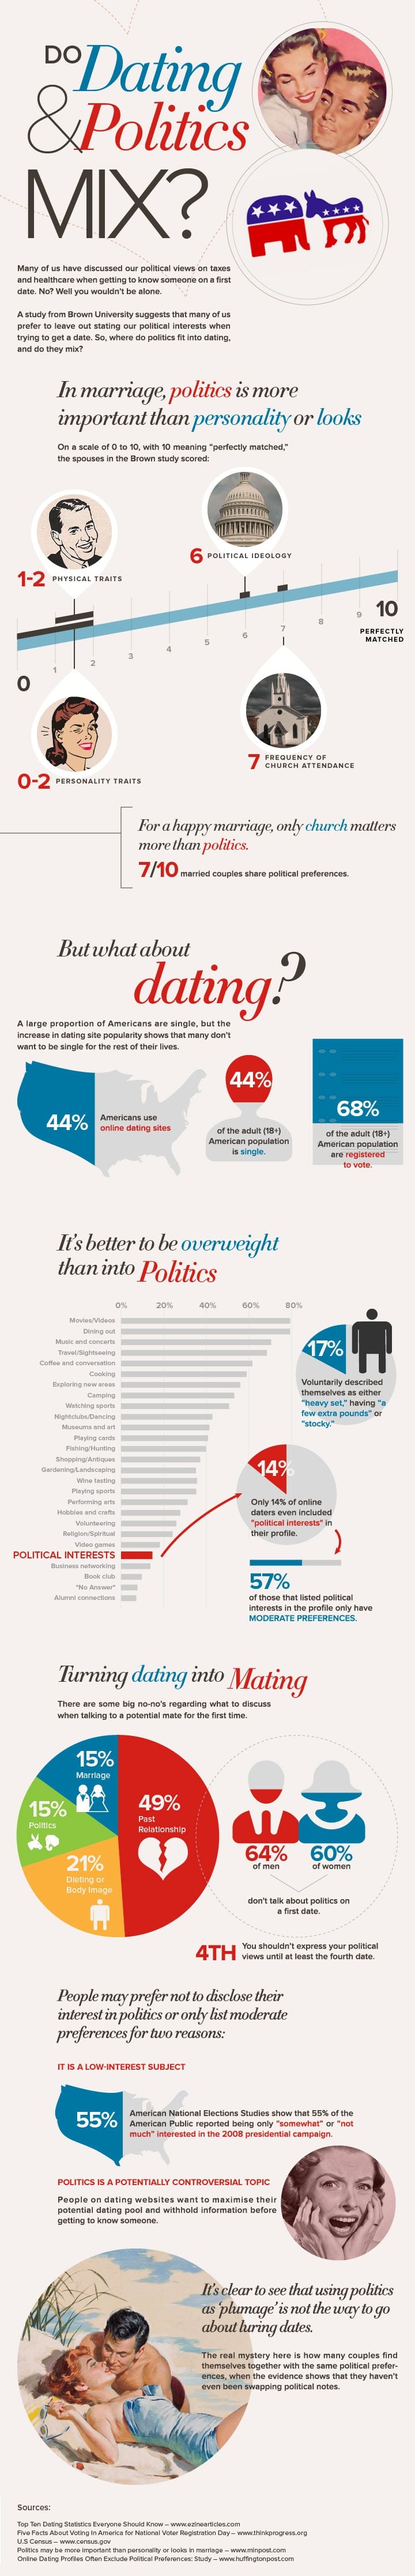 Infographic - Politics & Dating